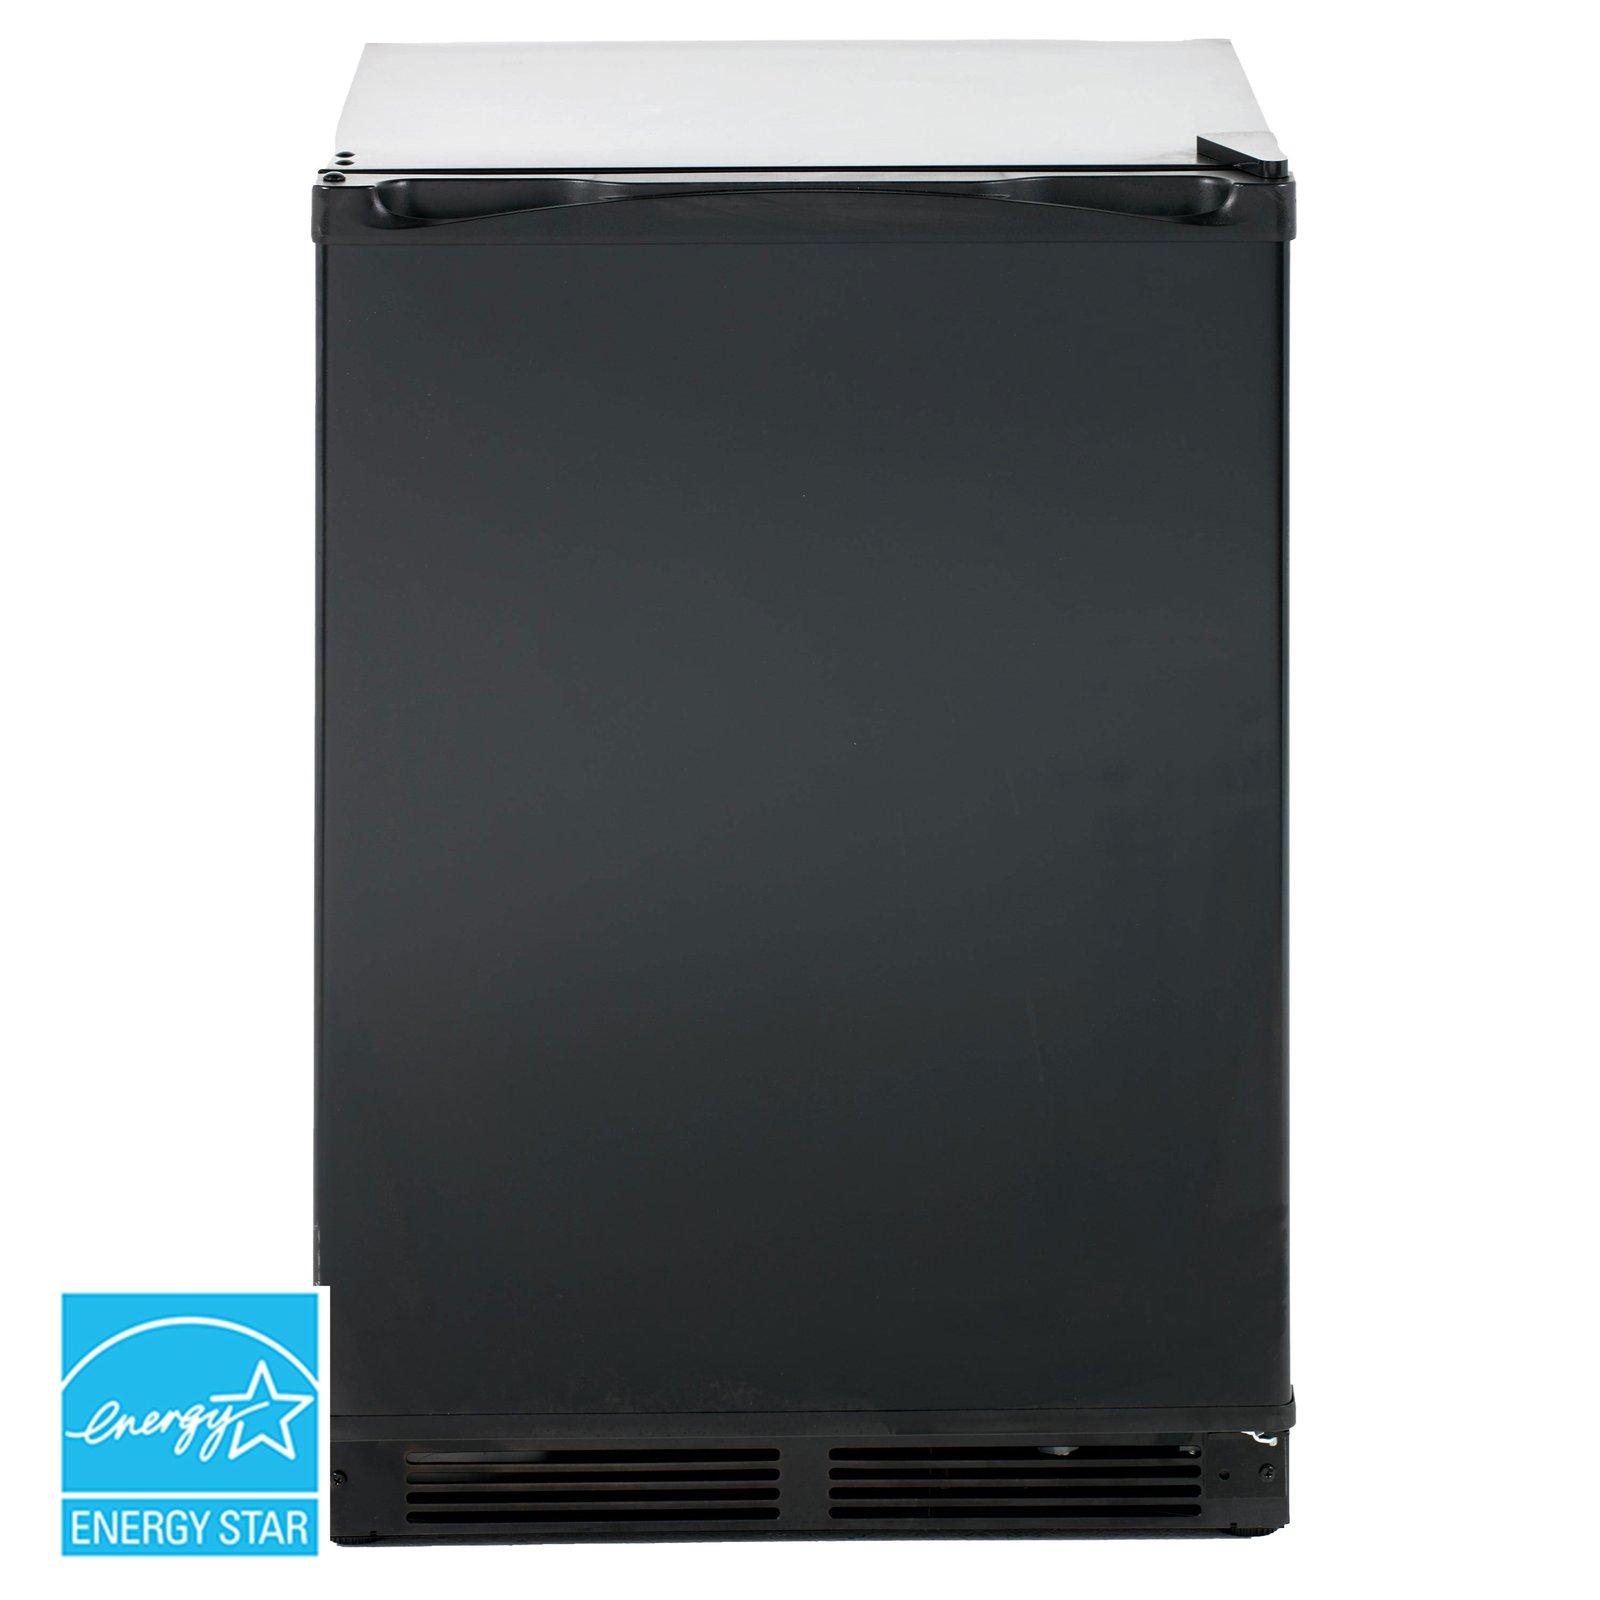 AVANTI RM52T1BB 5.2 cu. ft. Compact Refrigerator